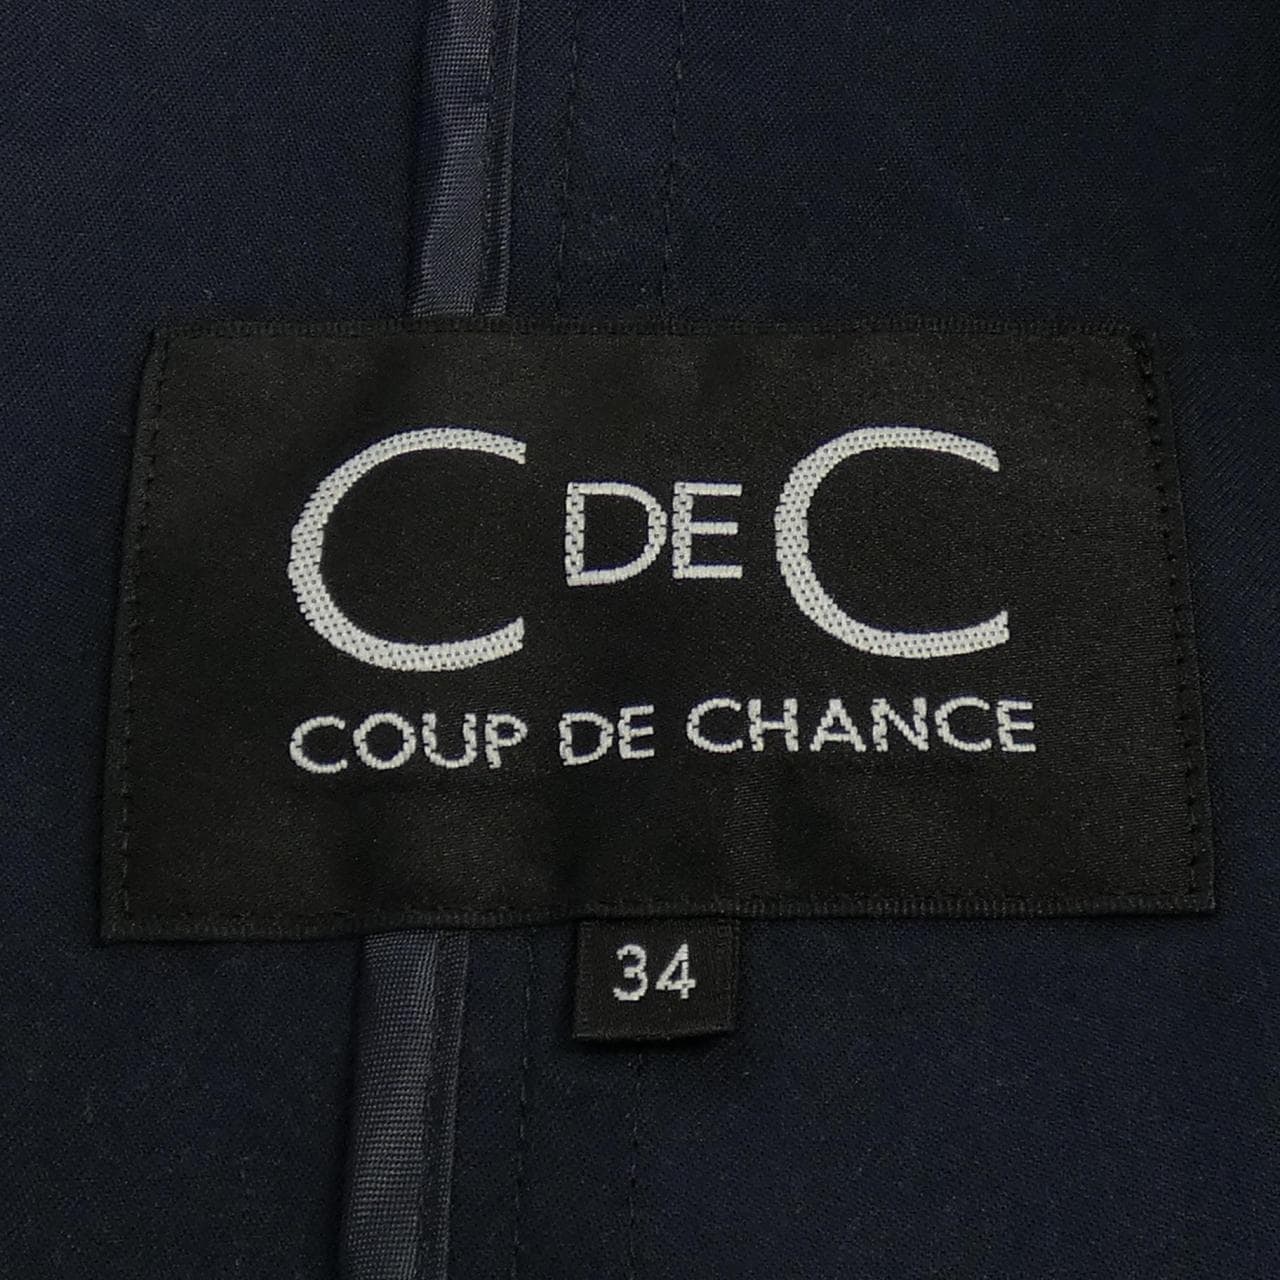 CdeC COUP DE CHANCE(クードシャンス)  ジャケット